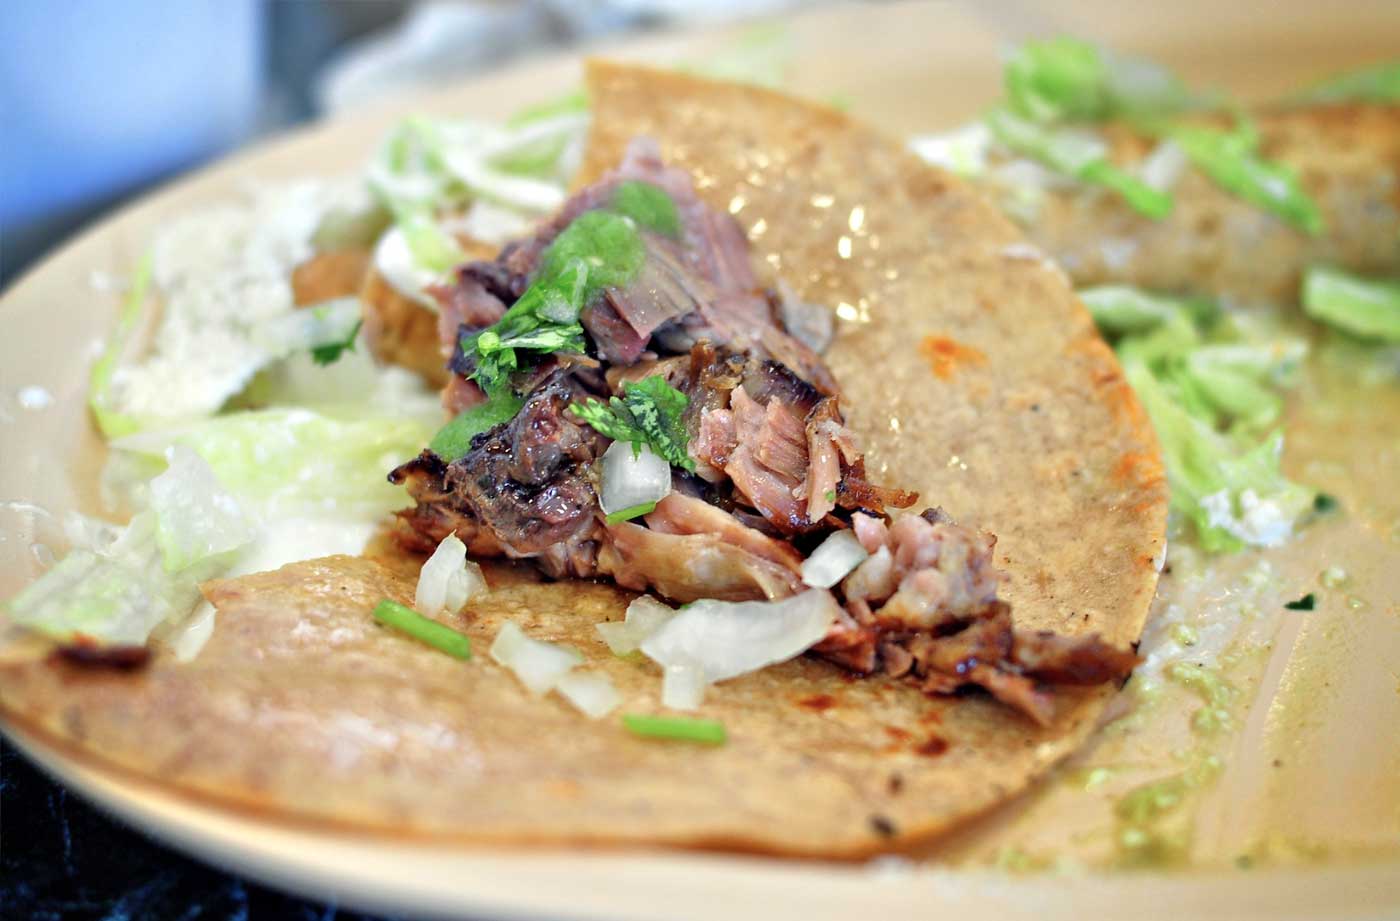 Chula Vista City Cuisine - Mexican Food - Taco